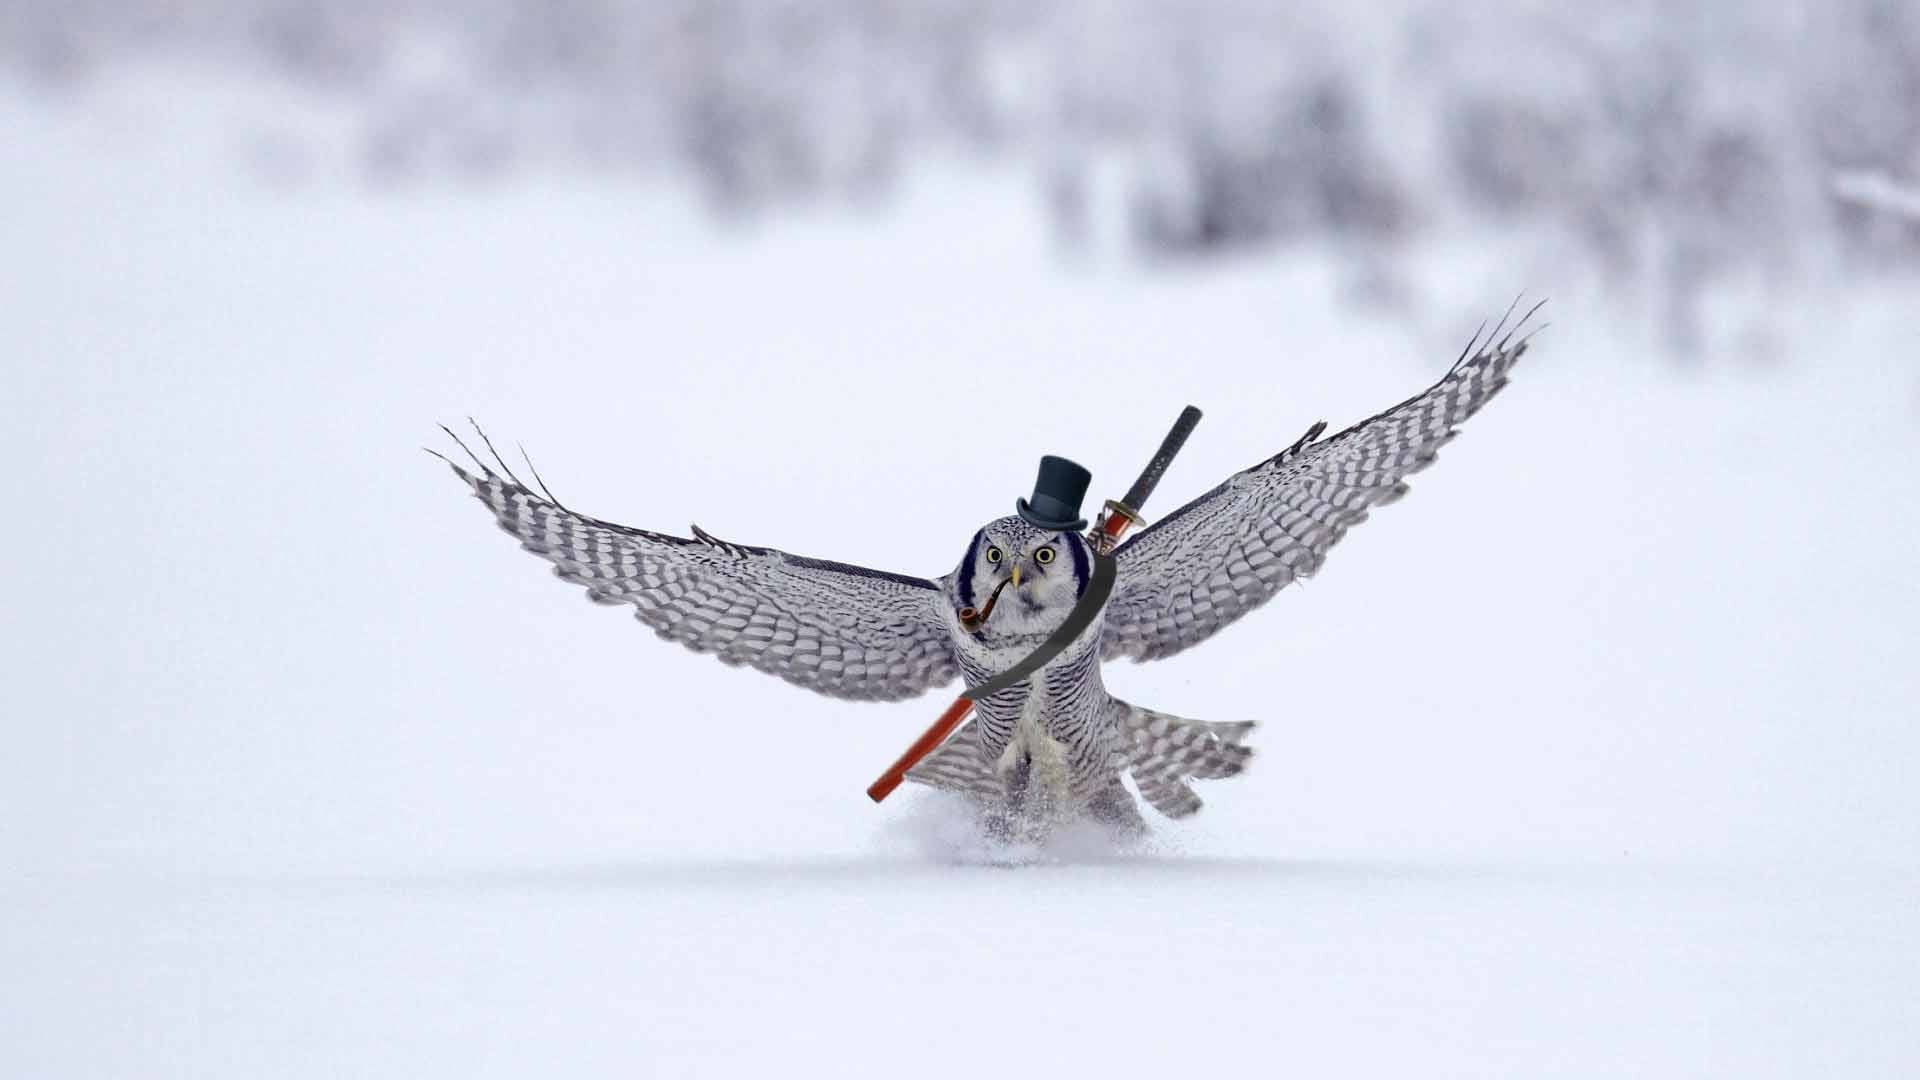 gray owl, winter, snow, humor, photo manipulation, animals, birds